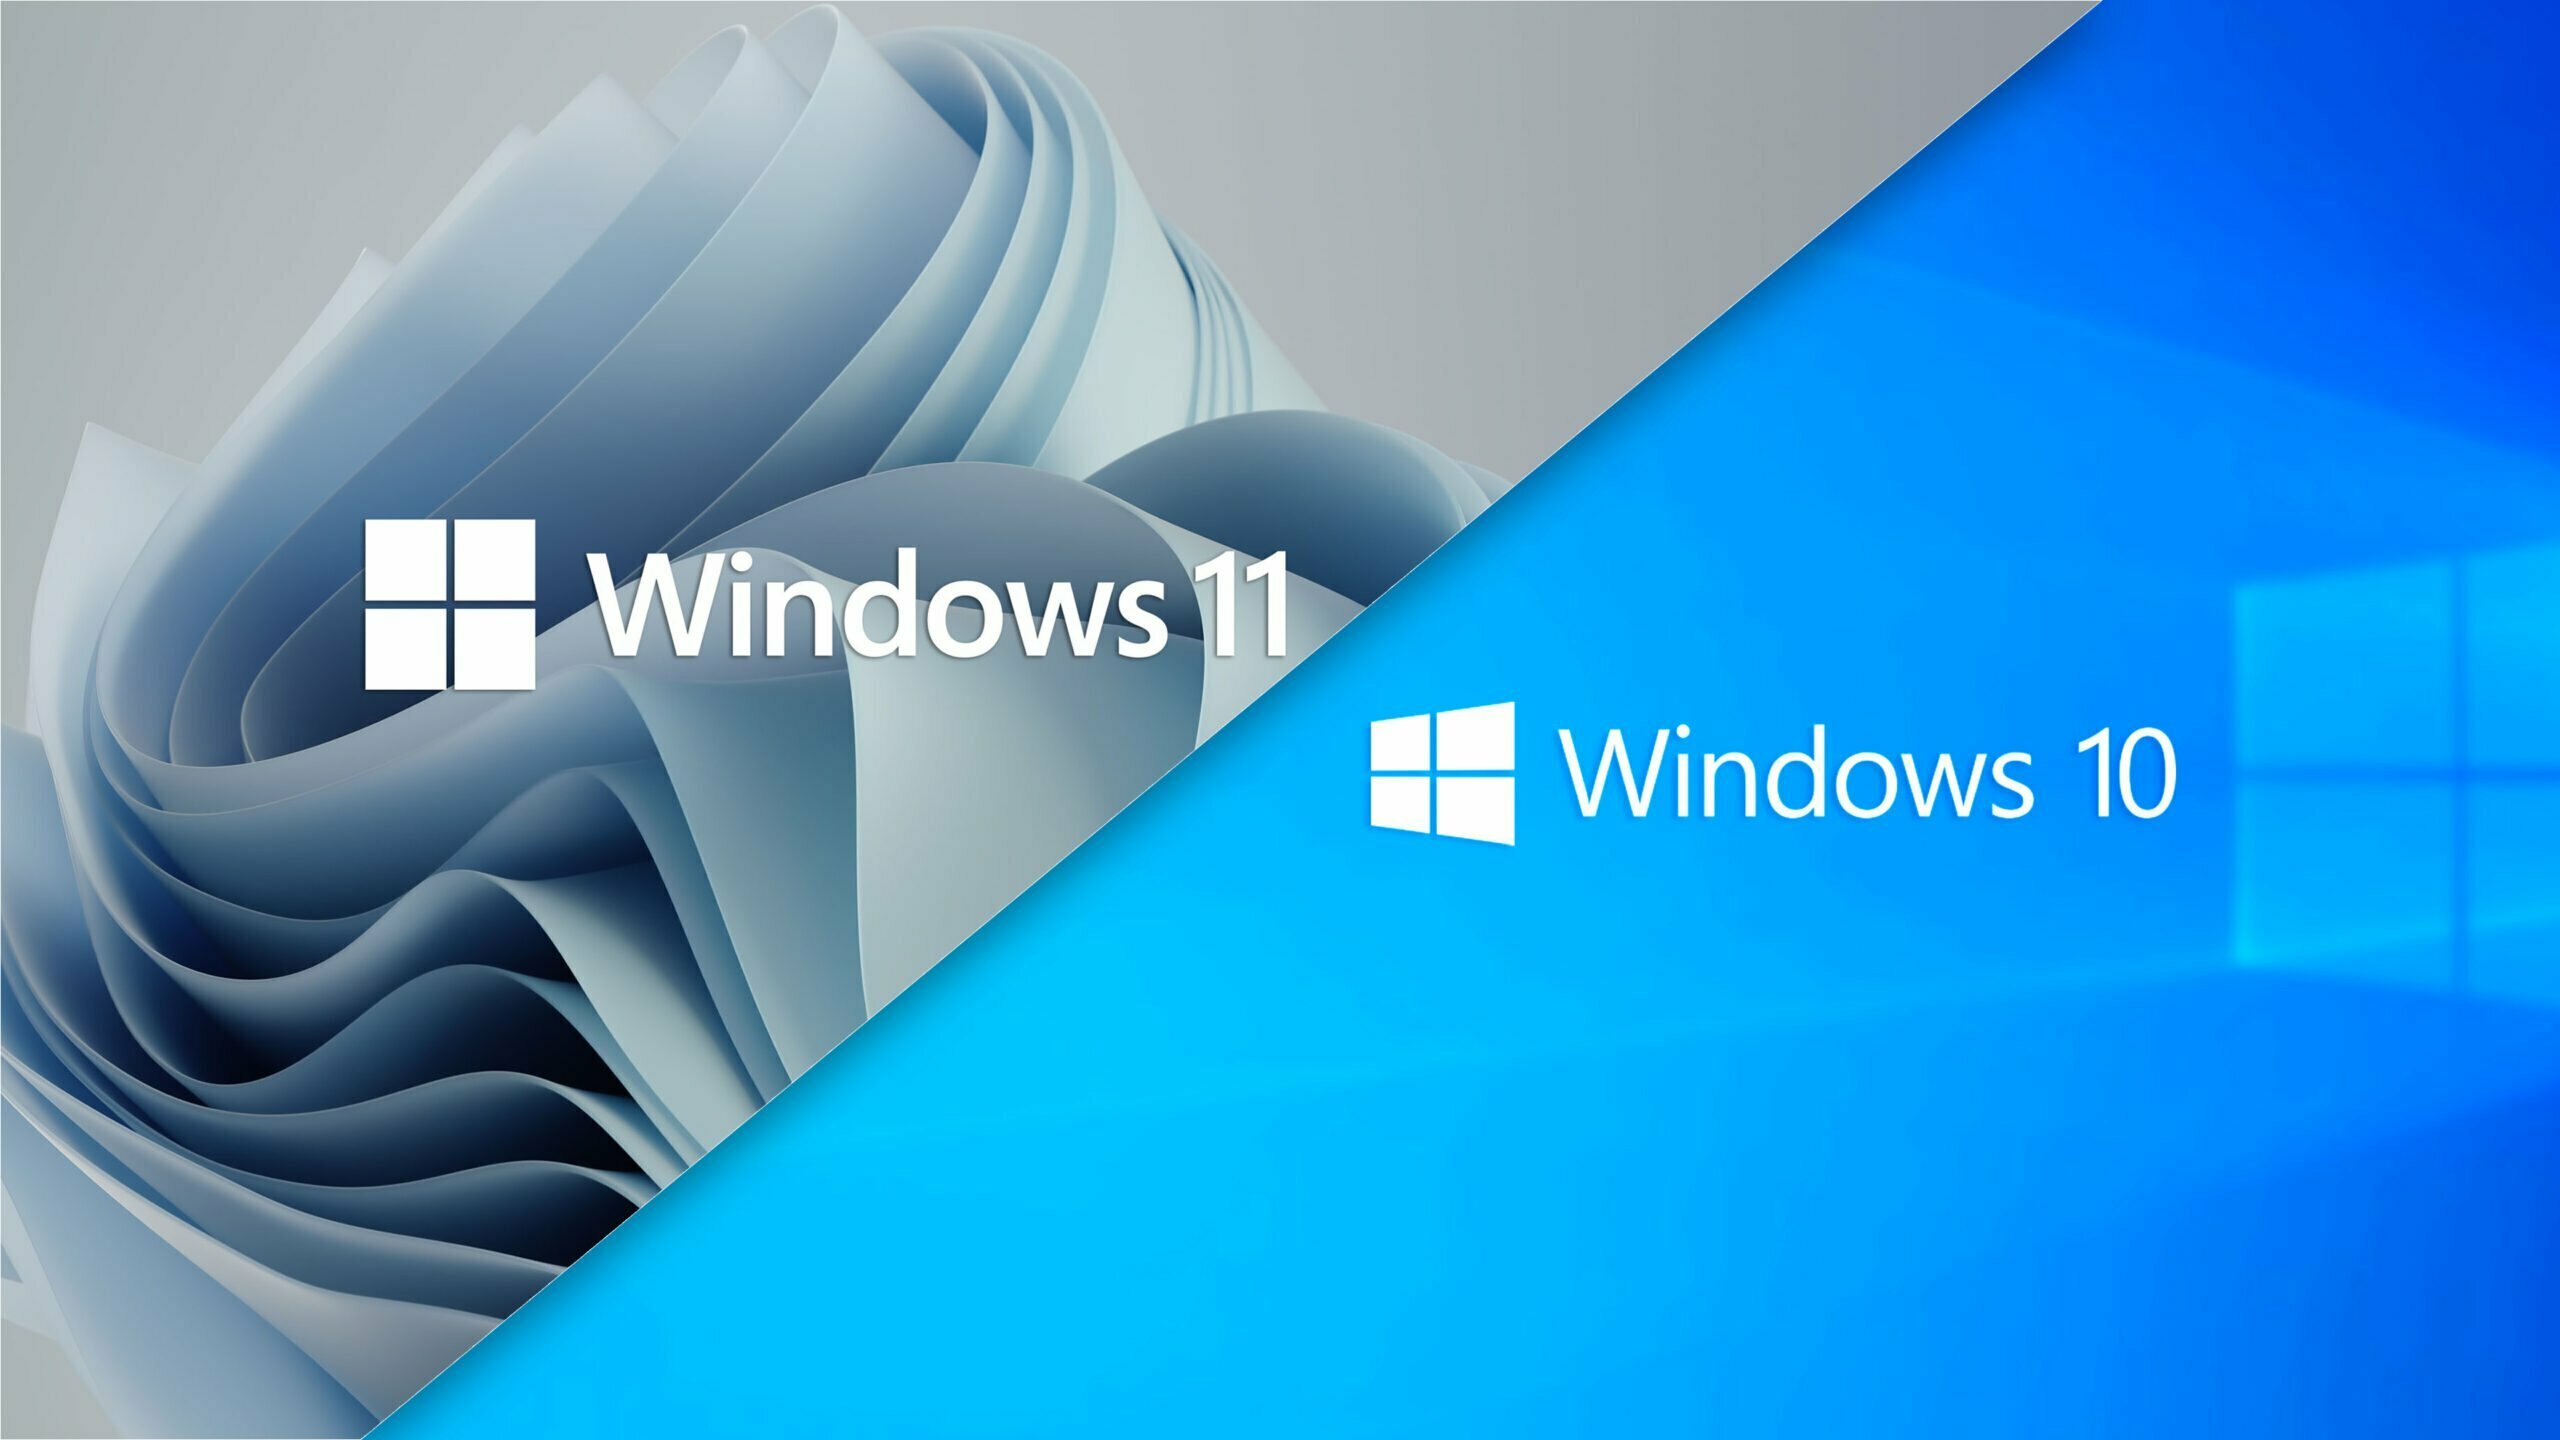 Easily Downgrade Windows 11 to Windows 10 - Easy Method